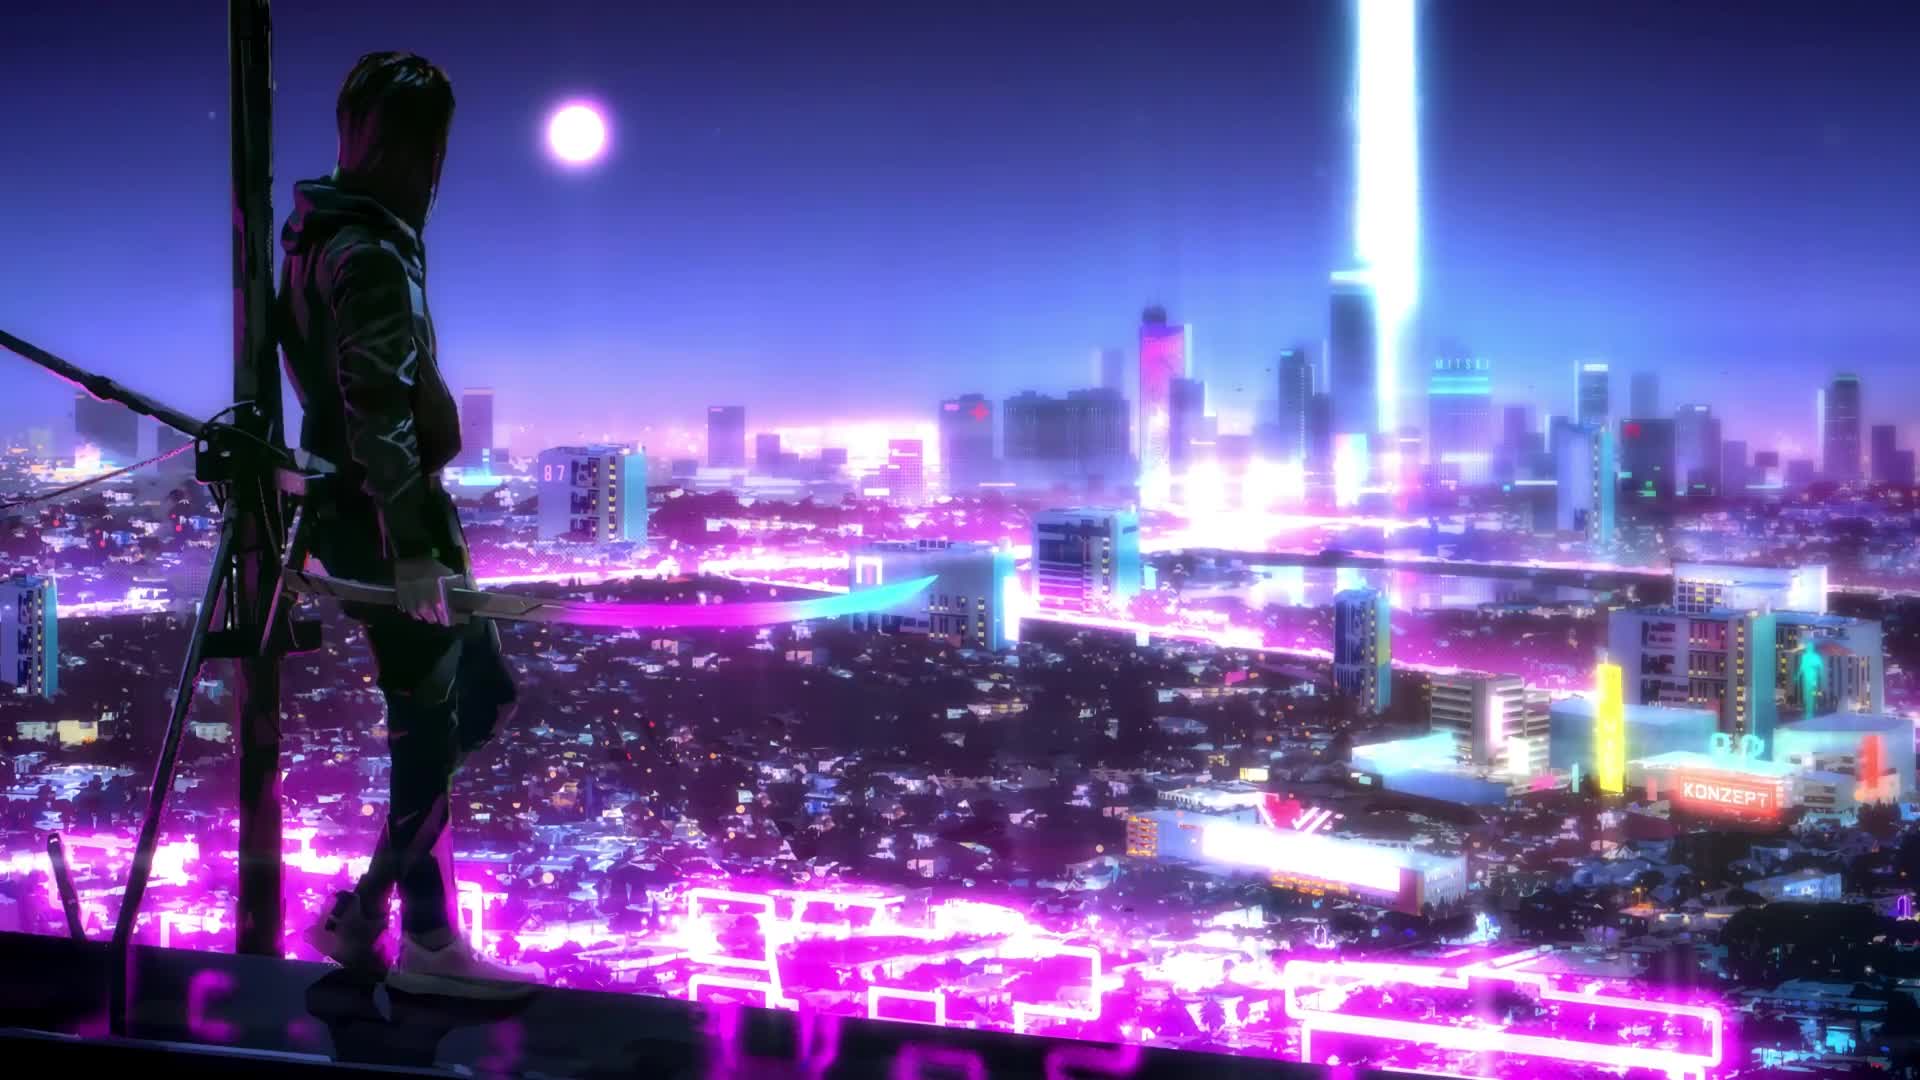 Neon Samurai with Katana Night City Cyberpunk Desktop Wallpaper